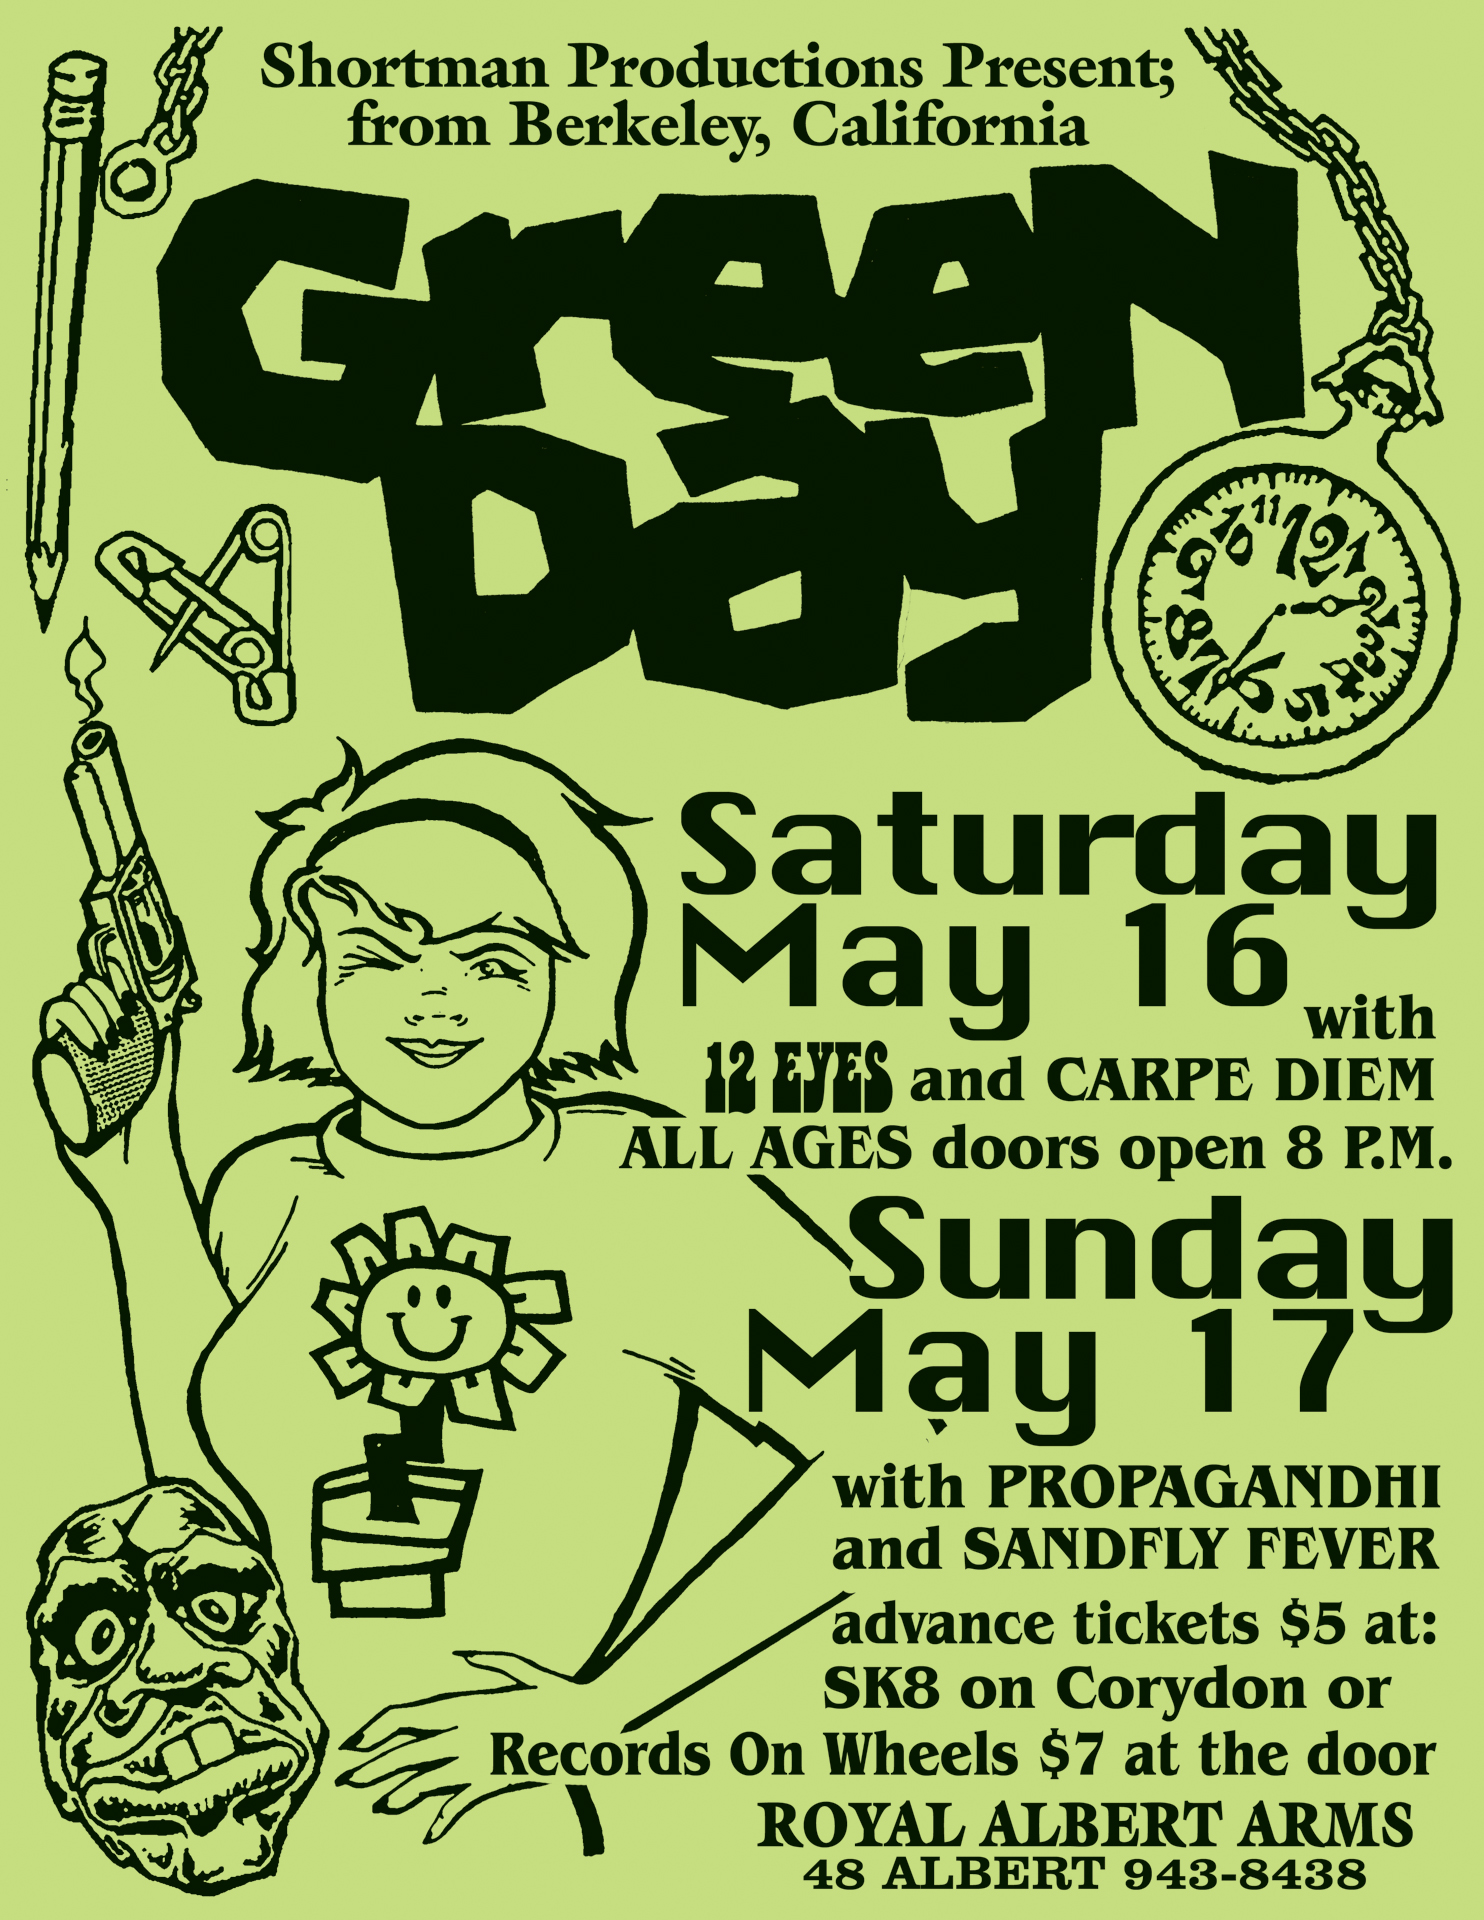 GREEN DAY – 1992